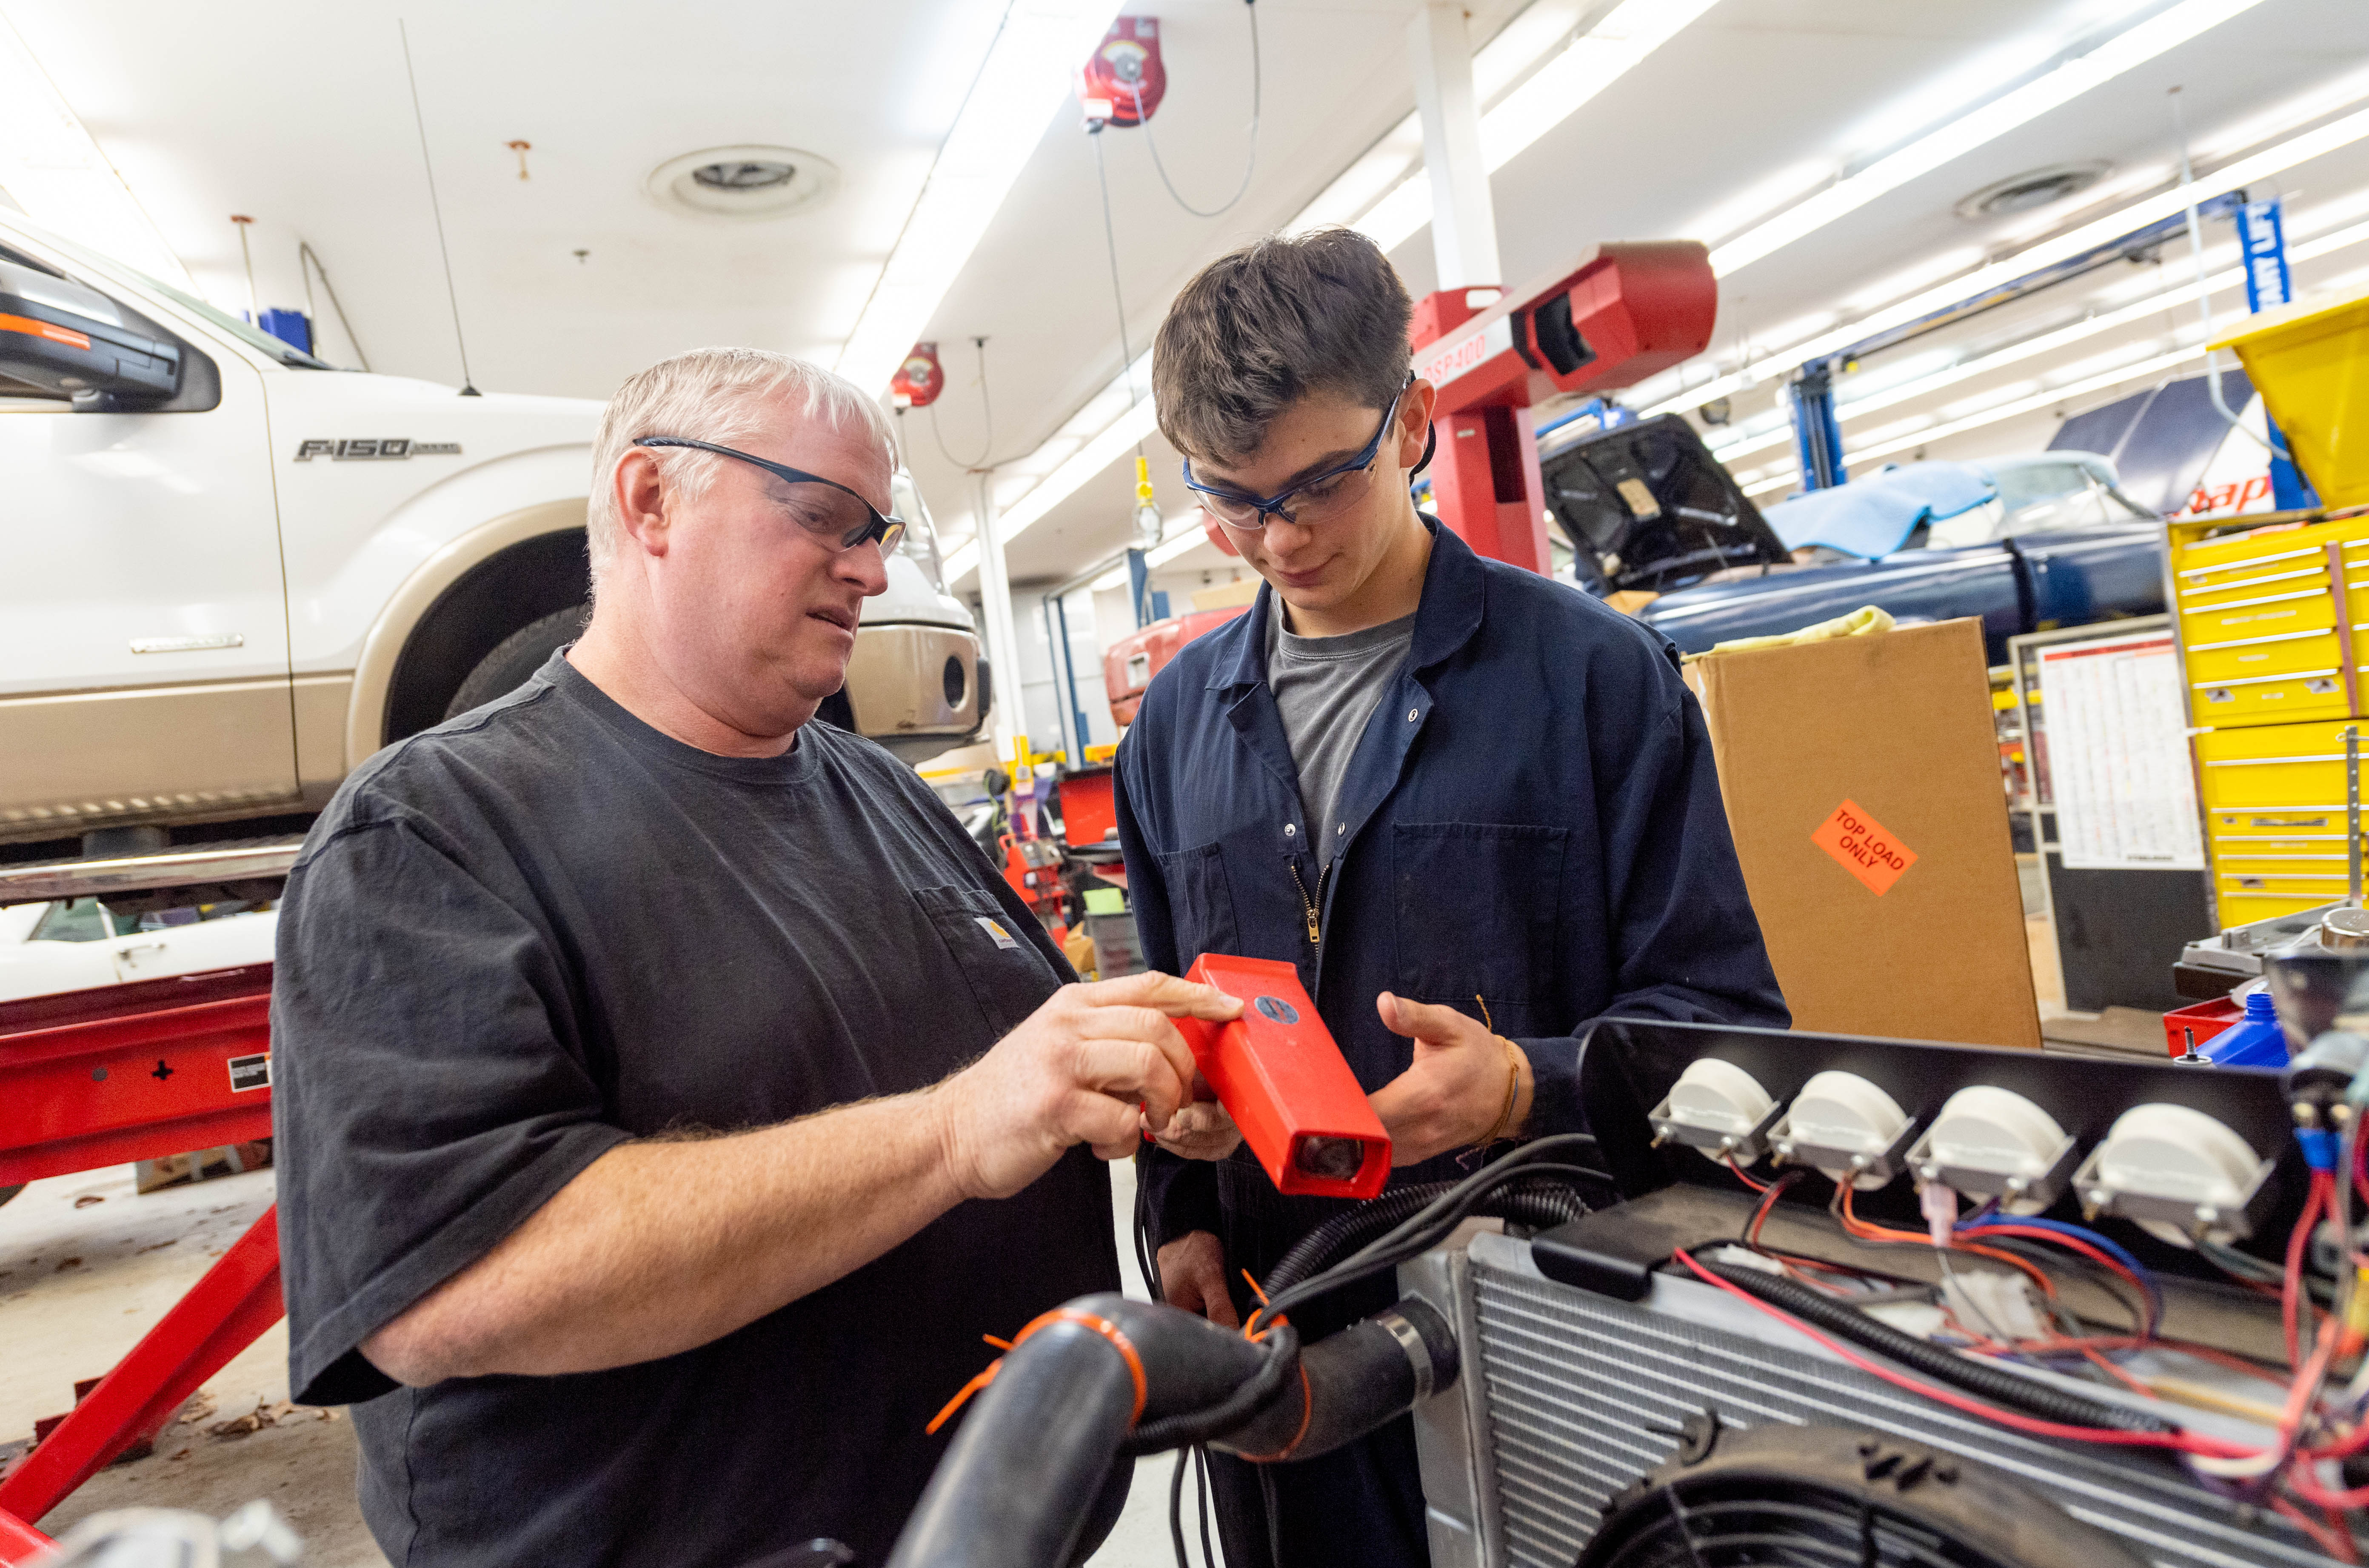 Lake Braddock automotive tech teacher David Plum works with a student in the auto shop classroom.